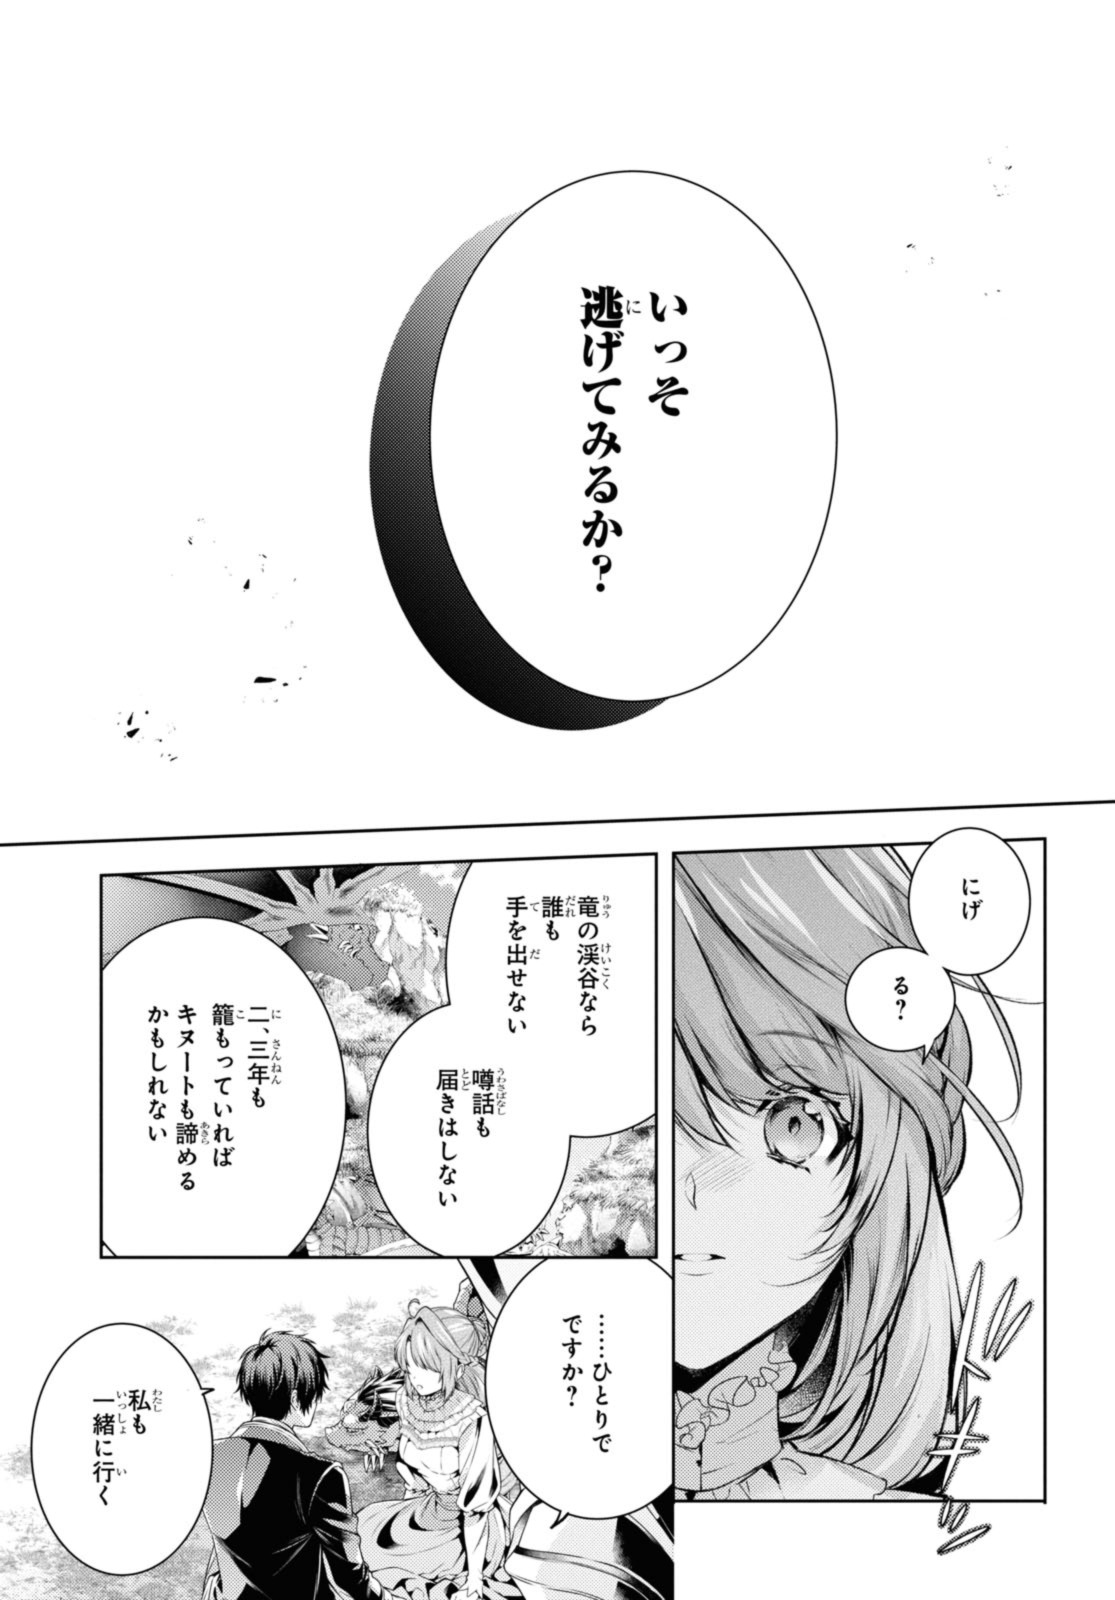 Ryukishi no Okiniiri - Chapter 46.1 - Page 5